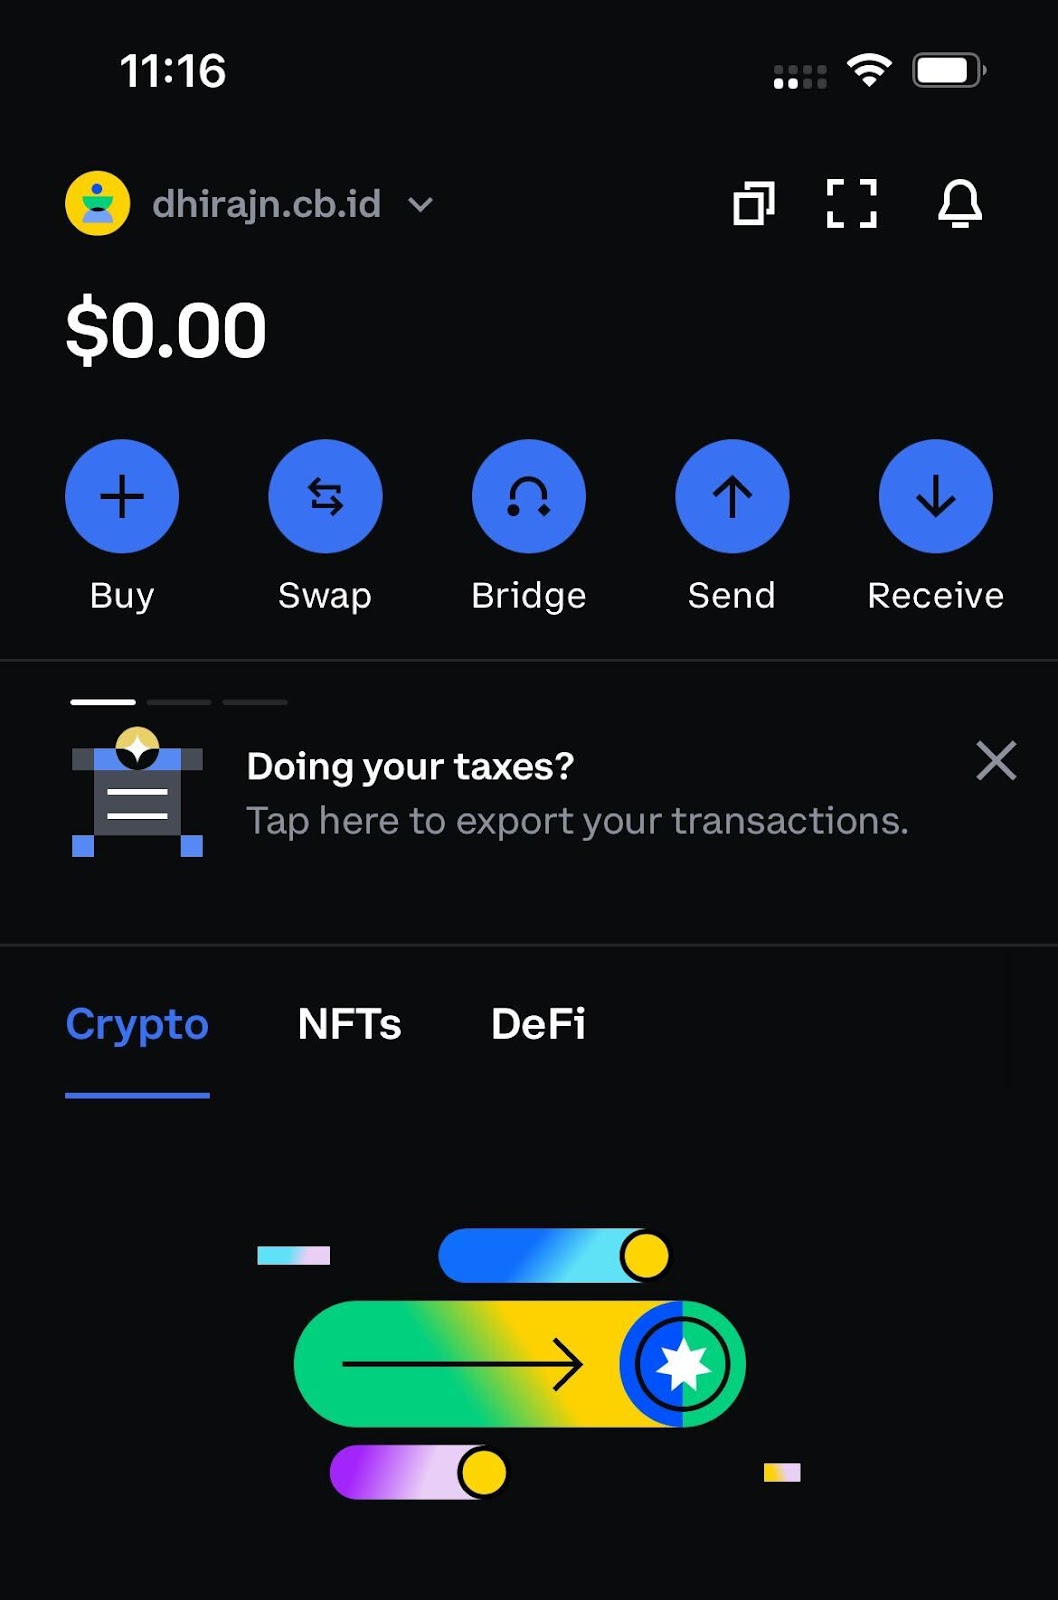 Receive crypto coinbsae wallet